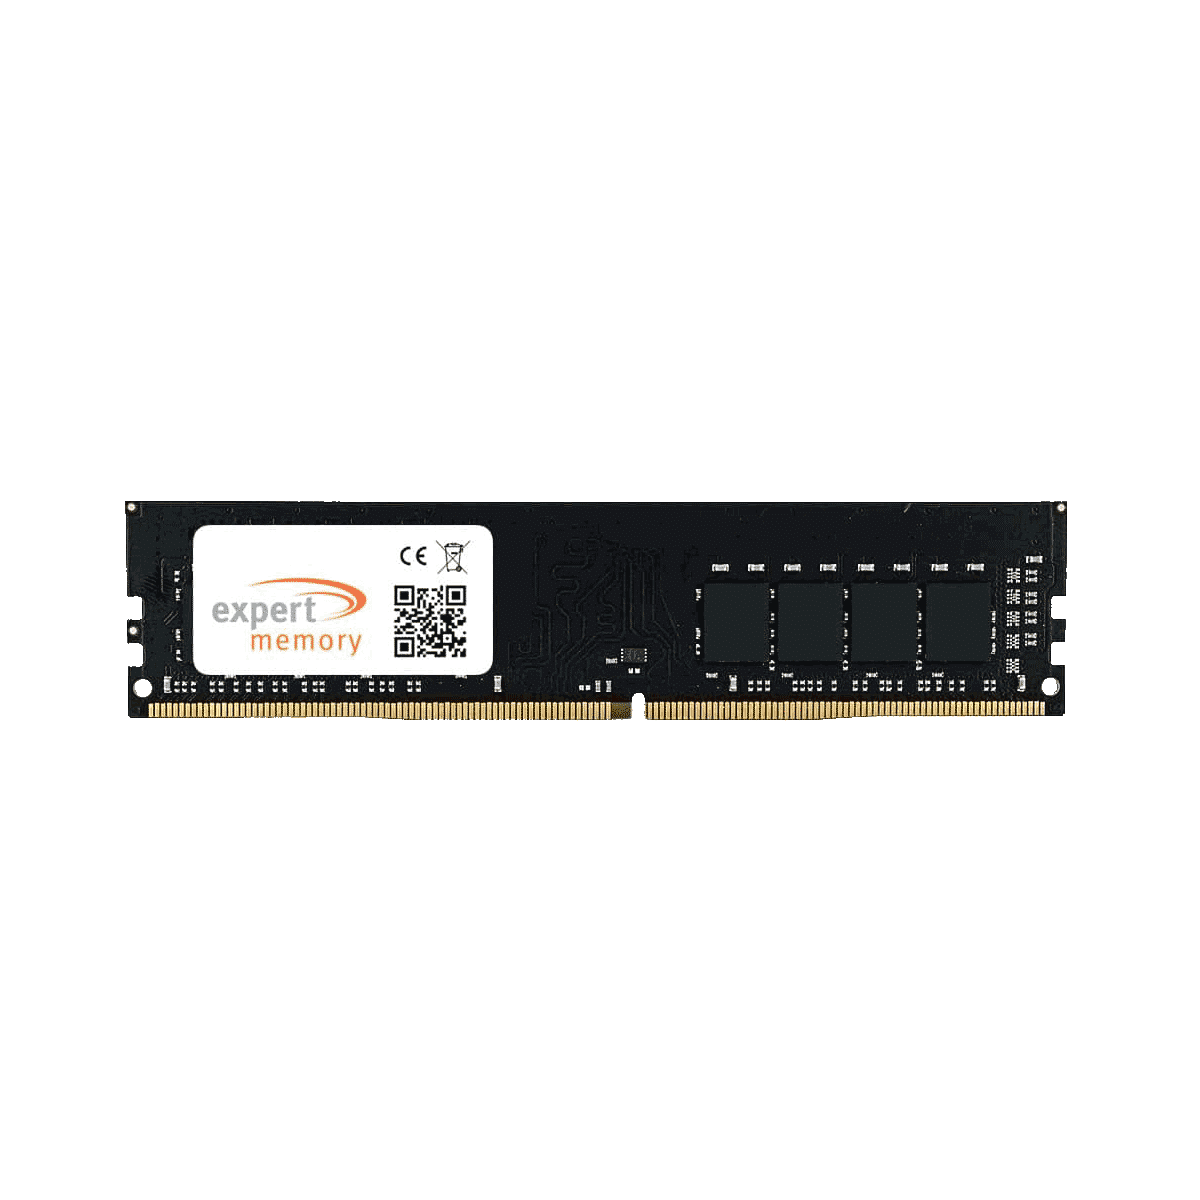 EXPERT MEMORY 32GB 2666 UDIMM Upgrade RAM GB 32 Workstation/Desktop DDR4 Asus B150M 2Rx8 Mainboard Memory